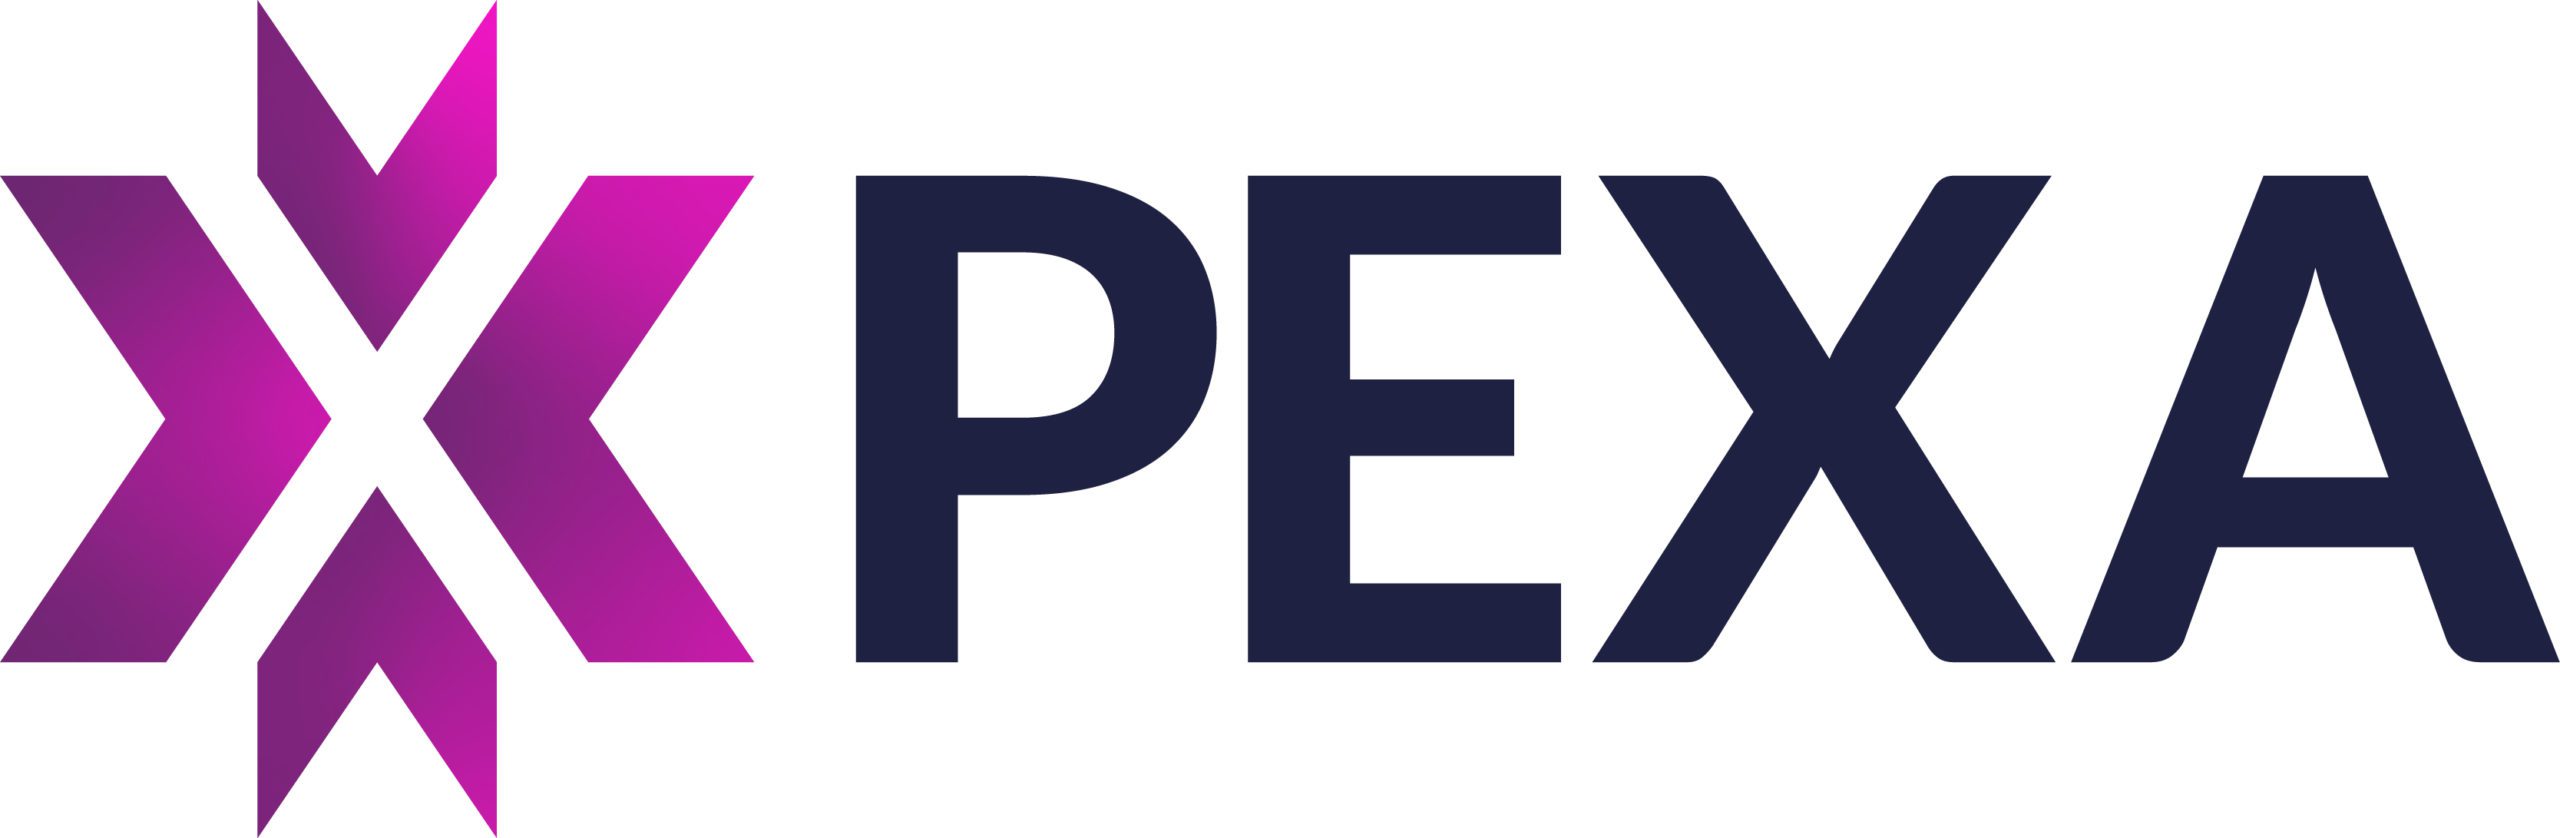 PEXA_Logo_Primary_Navy_RGB